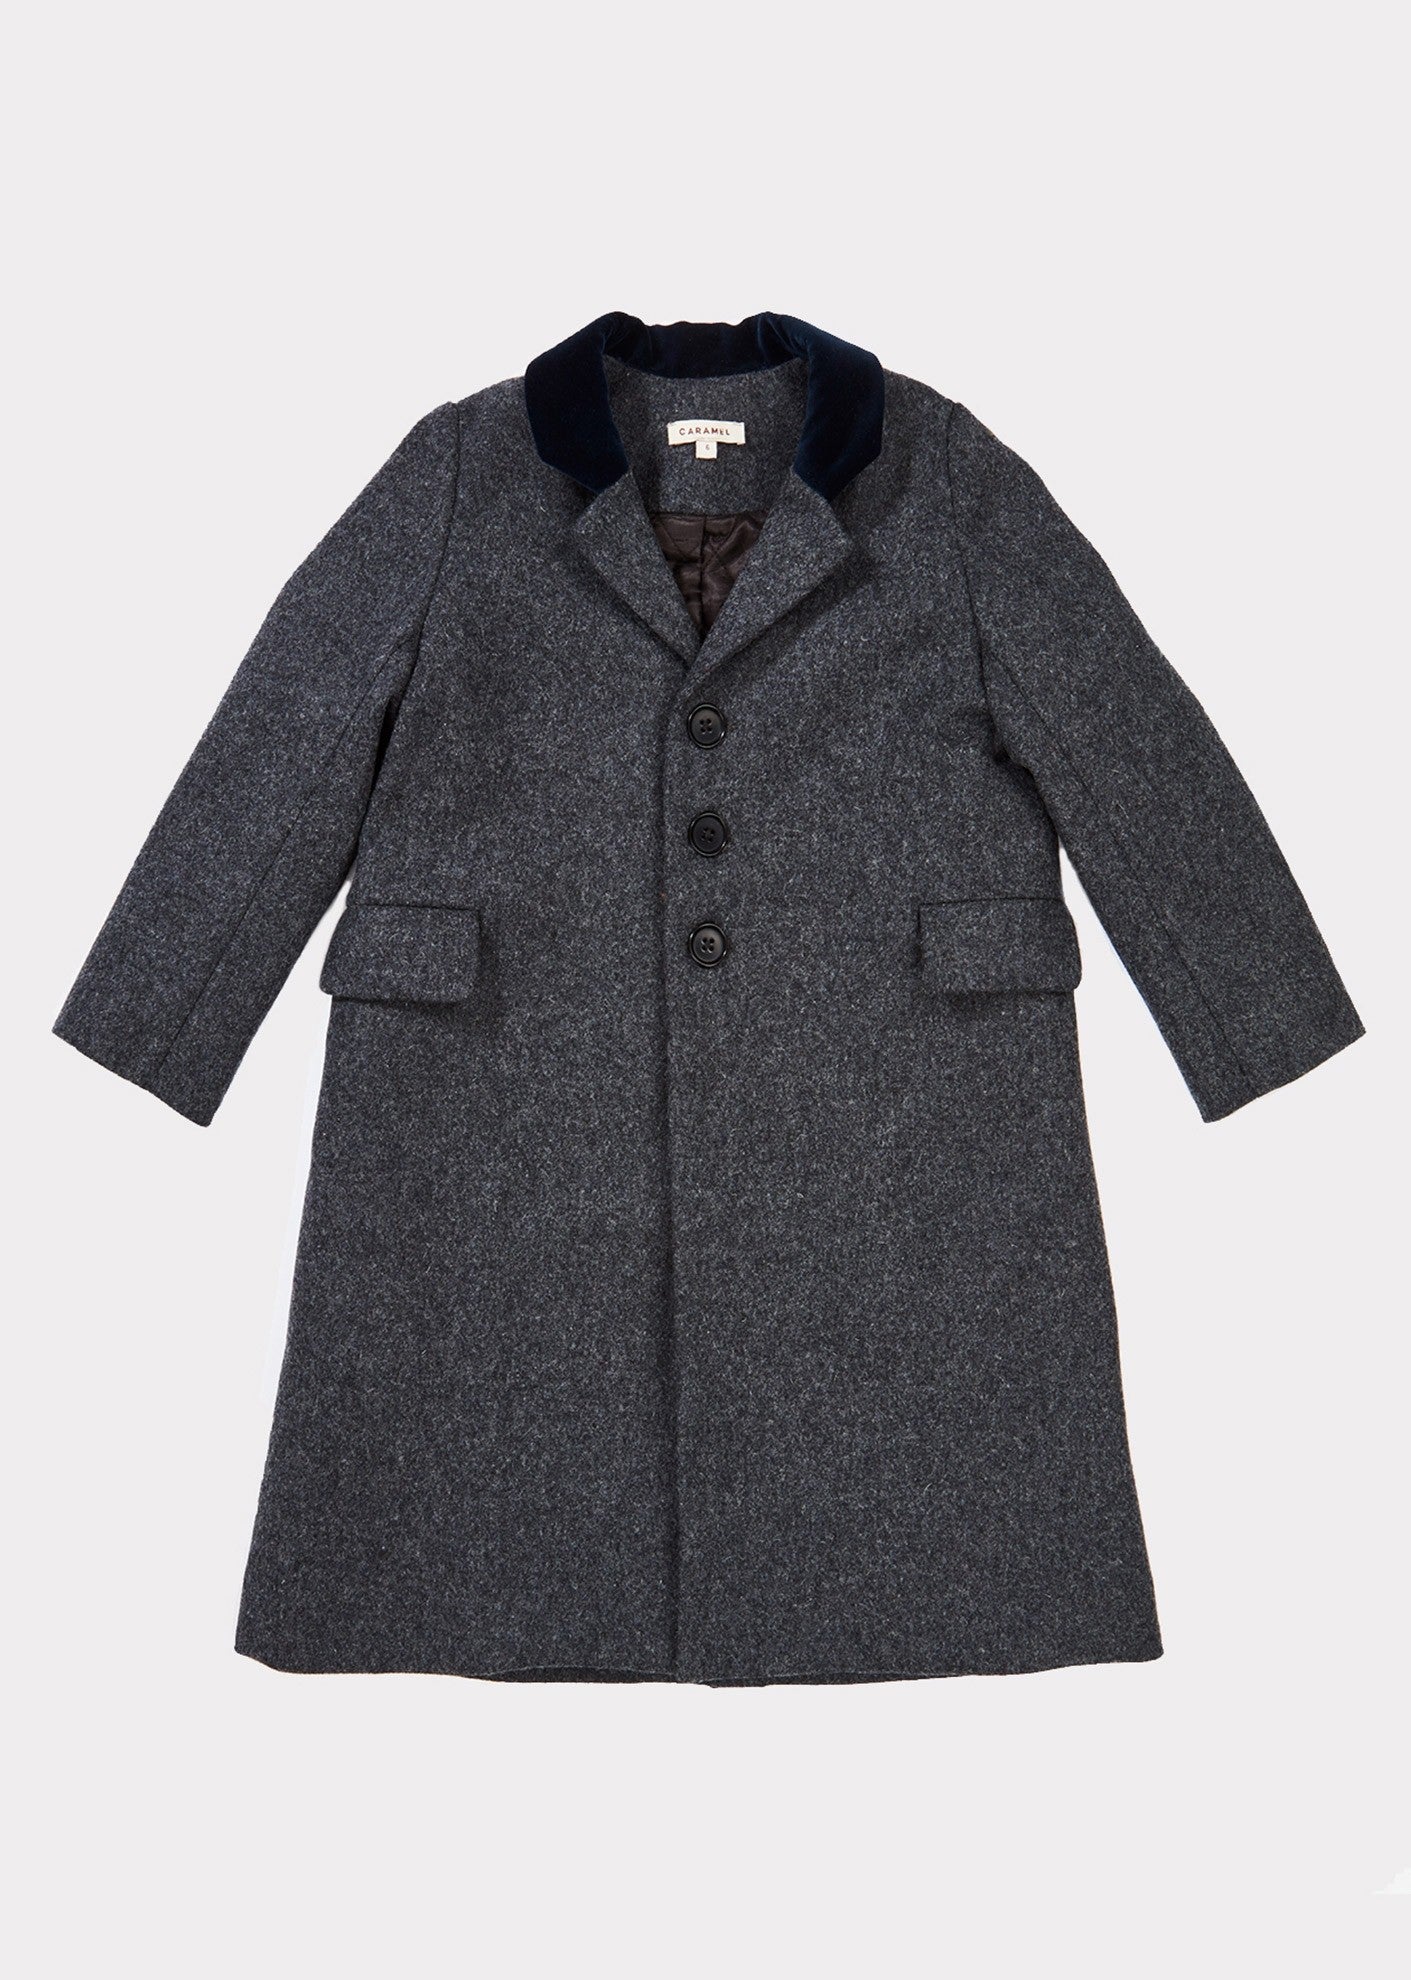 Boys Dark Grey Wool Coat